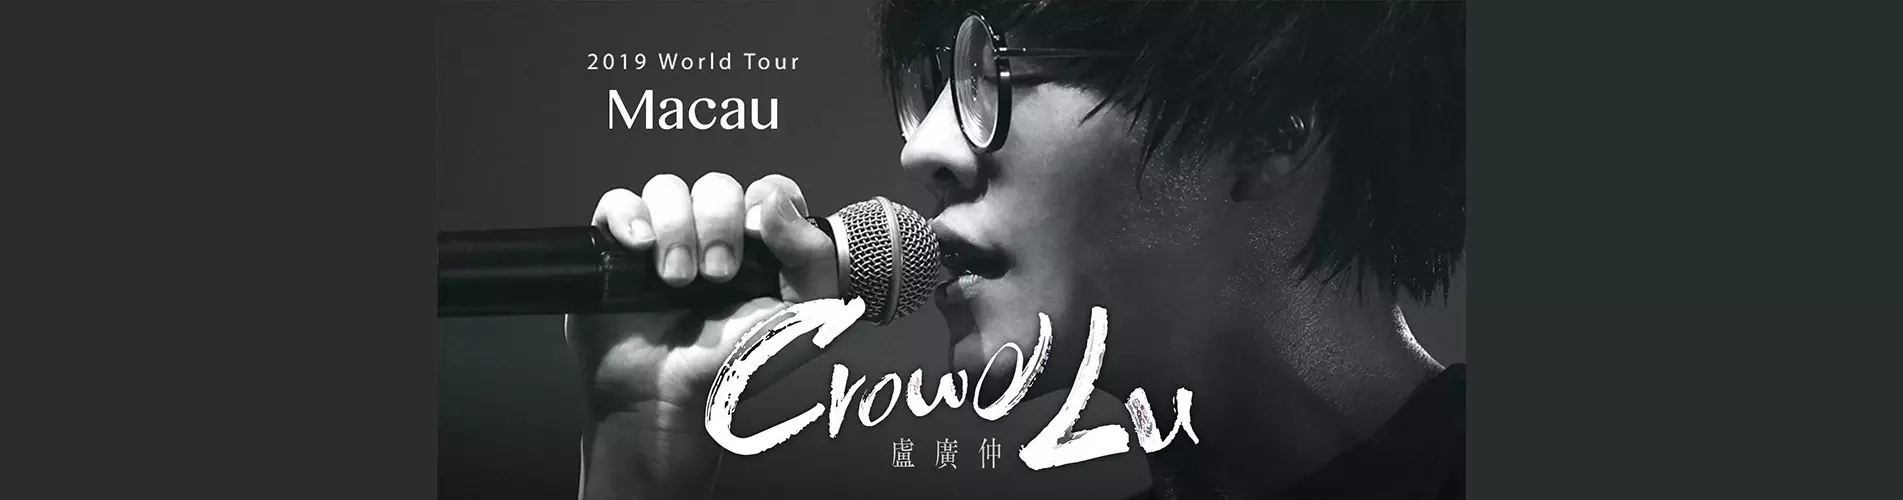 Crowd Lu 盧廣仲世界巡迴演唱會2019 - 澳門站